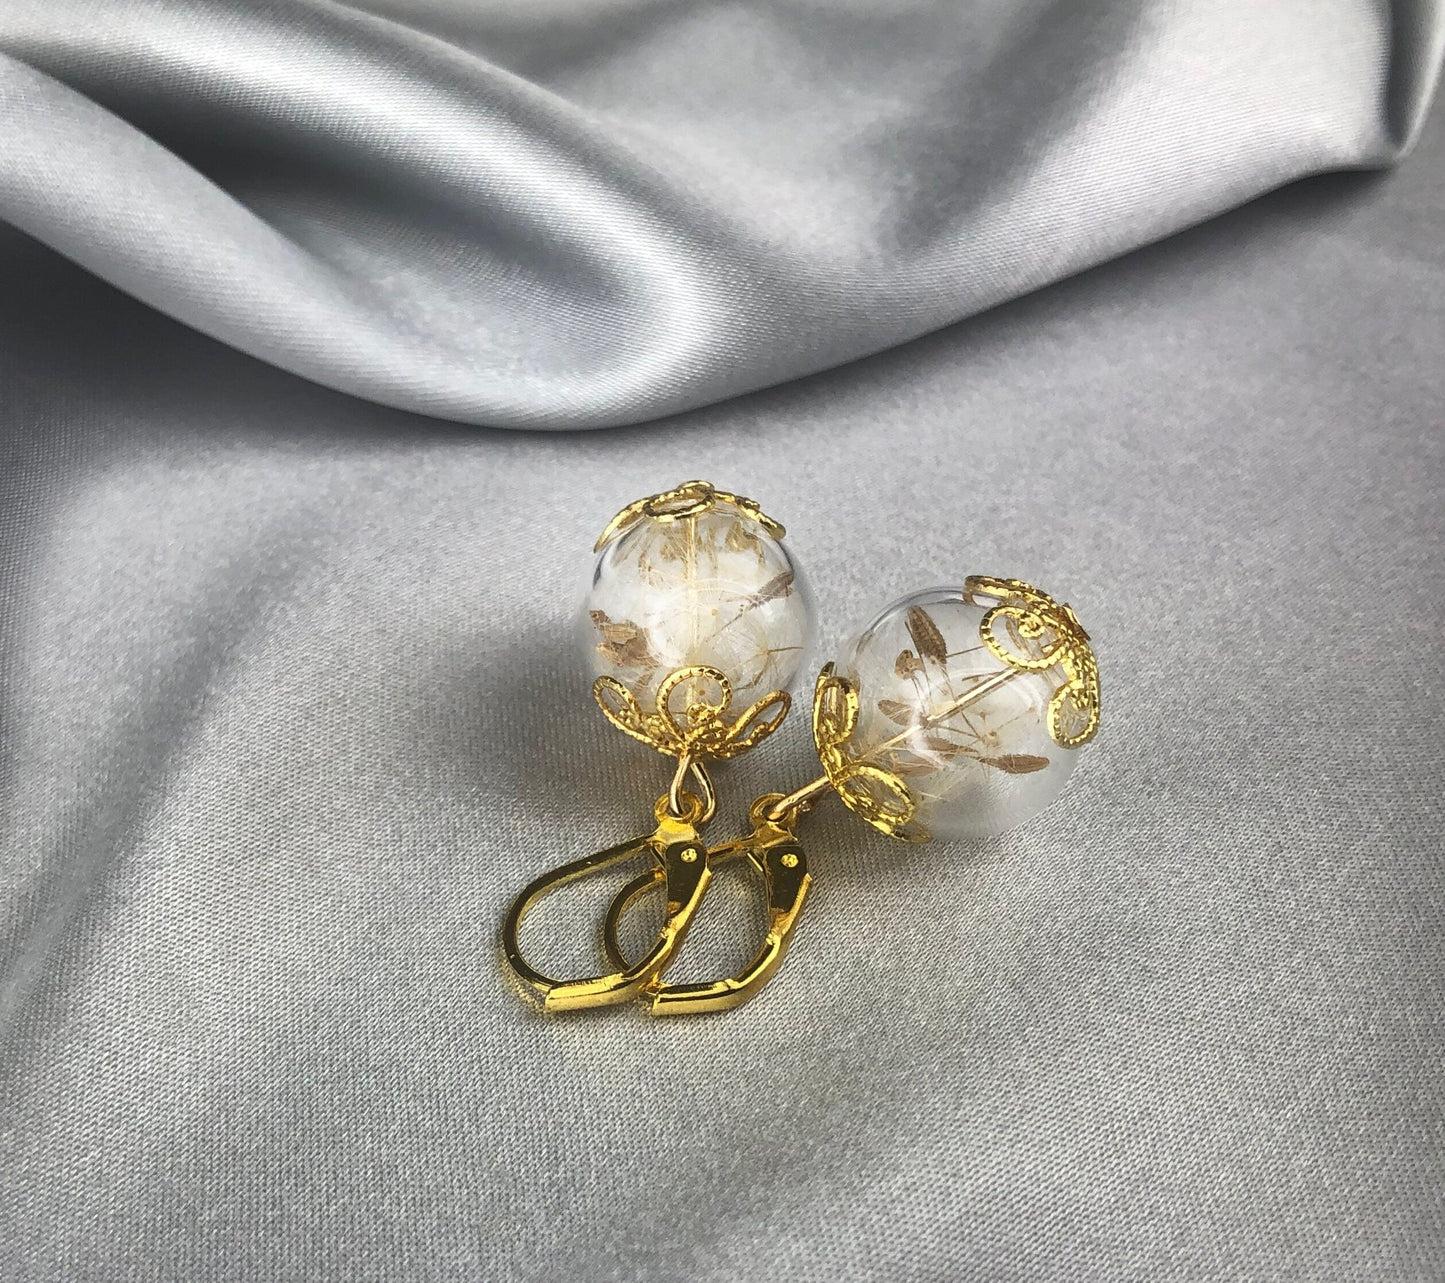 Real Pust Flowers Earrings - Golden Earrings with Dandelion Seeds - vinohr-71